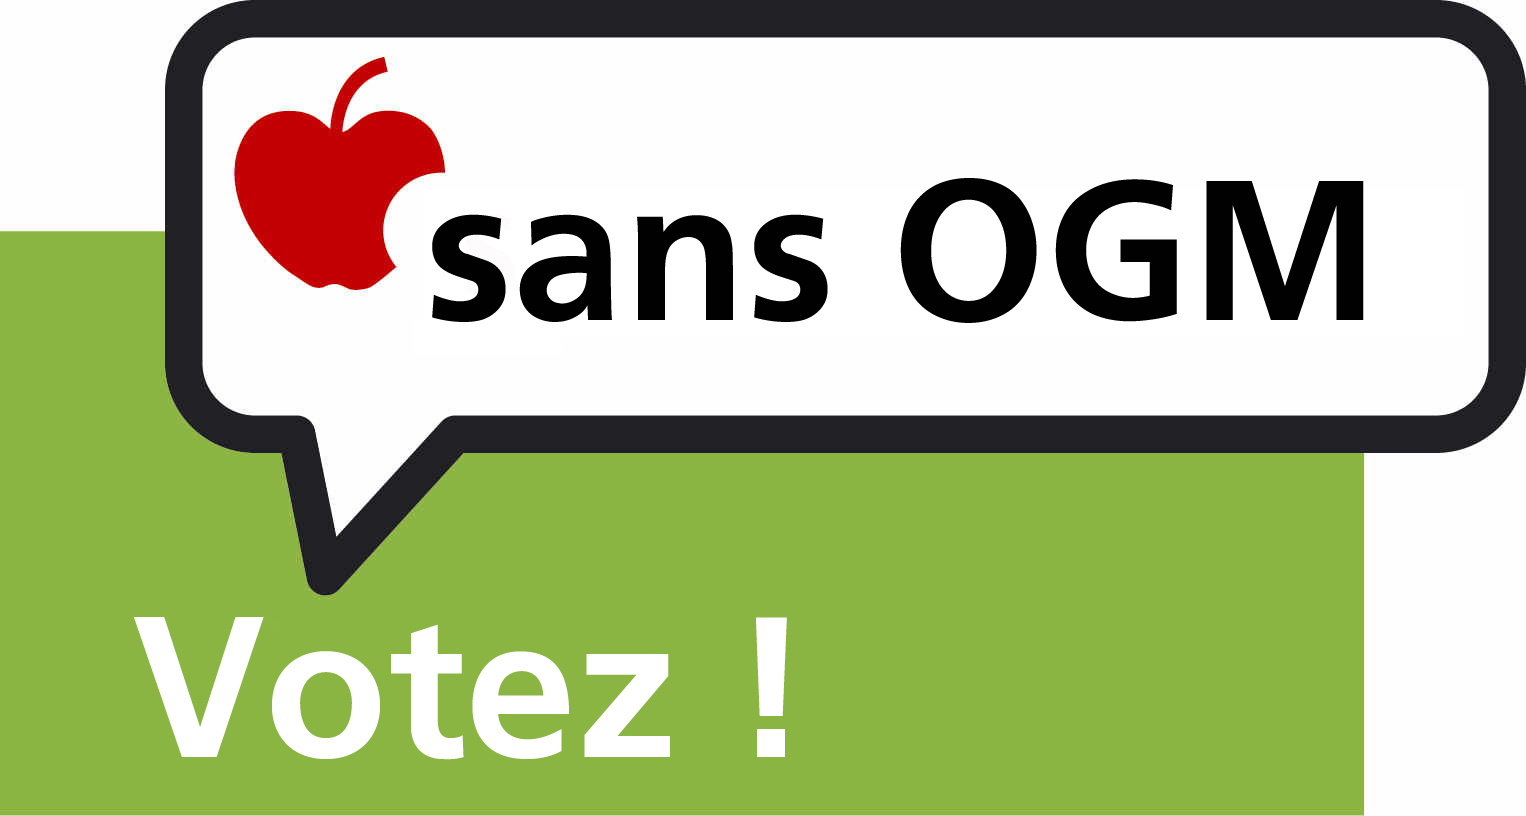 votez sans OGM logo copy